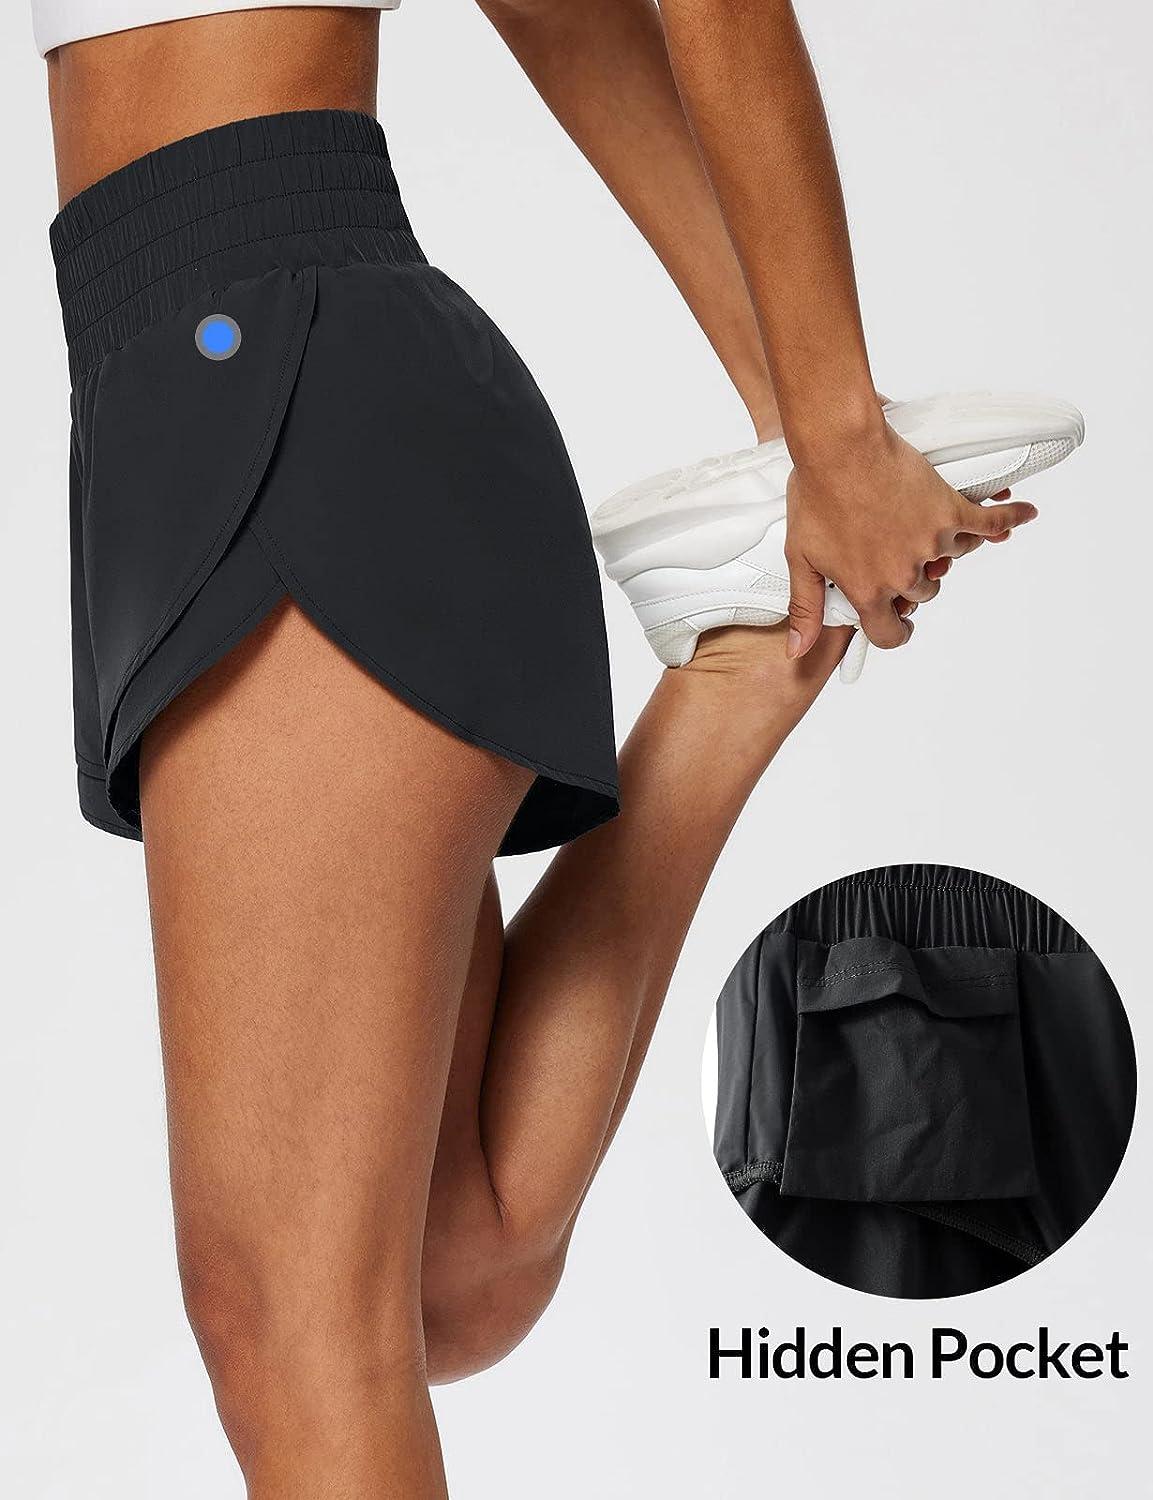 BALEAF Women's 3 Athletic Shorts Quick Dry with Pockets Black Size XXL 